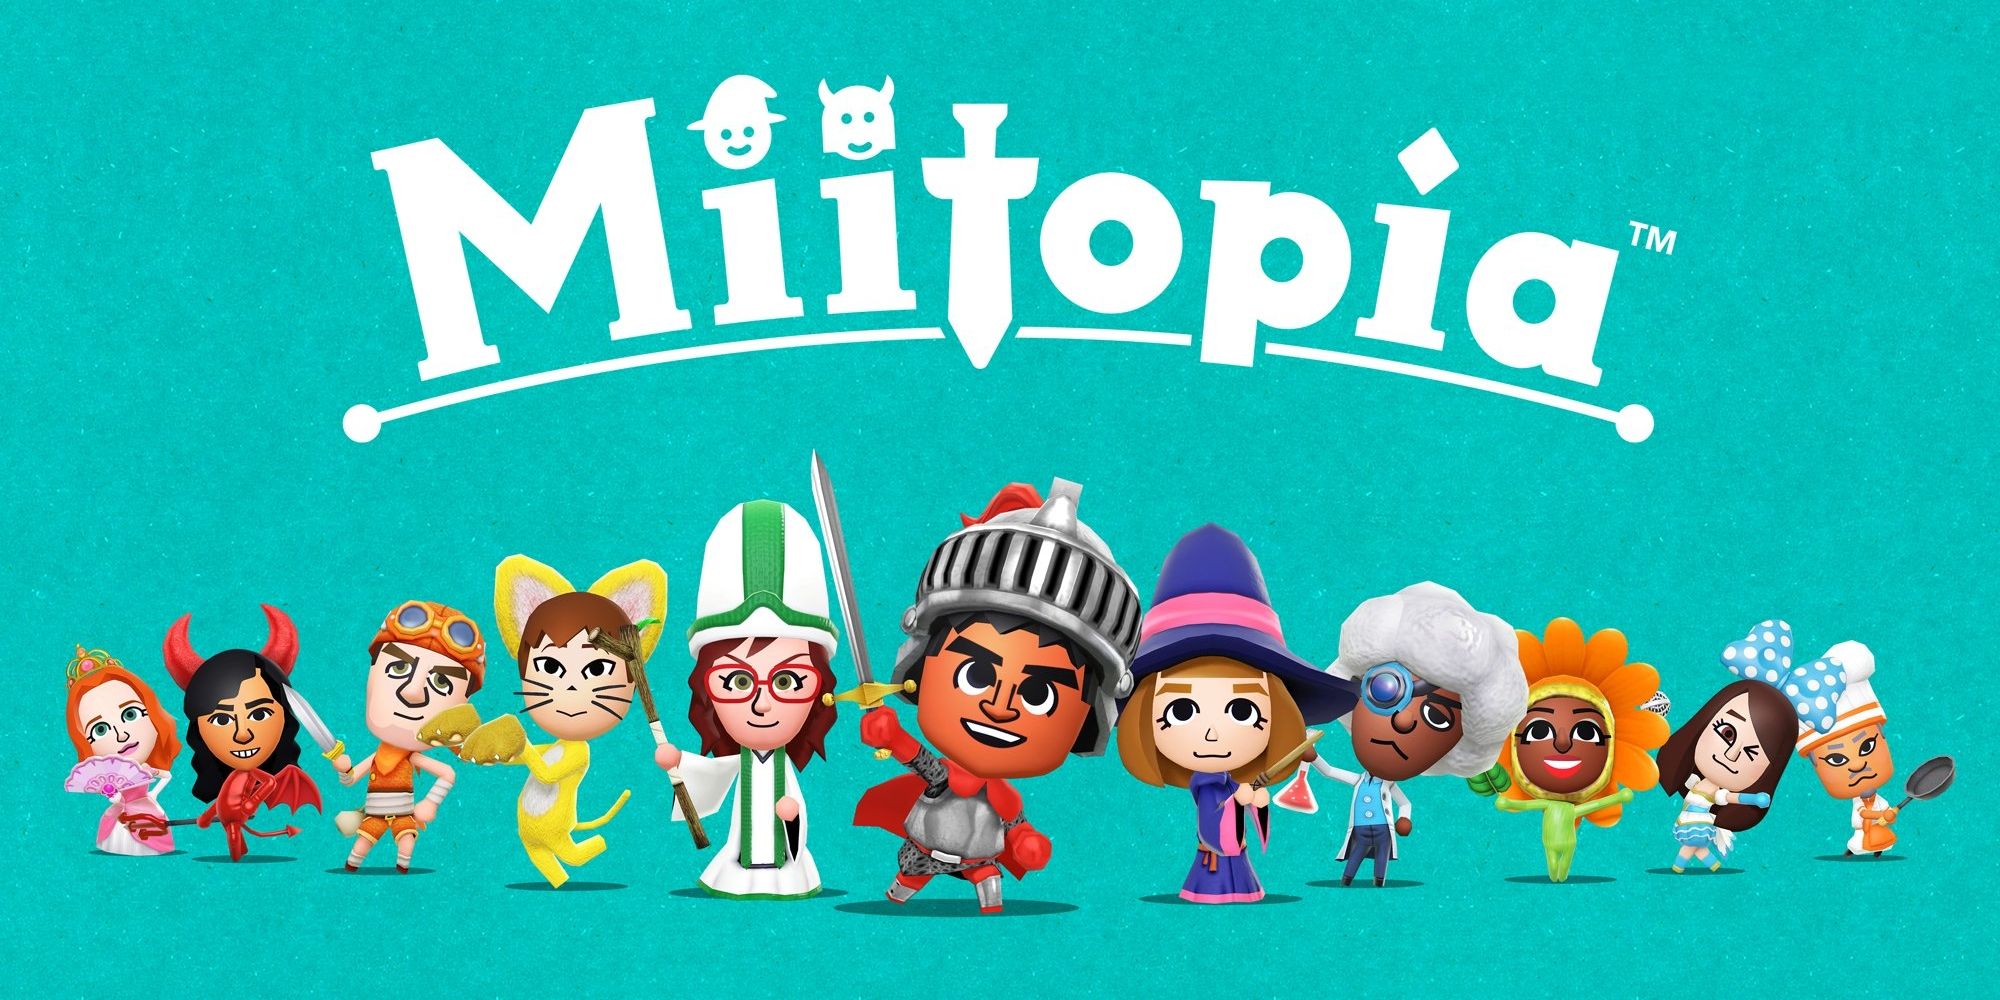 Miitopia Image from Nintendo of America's Twitter